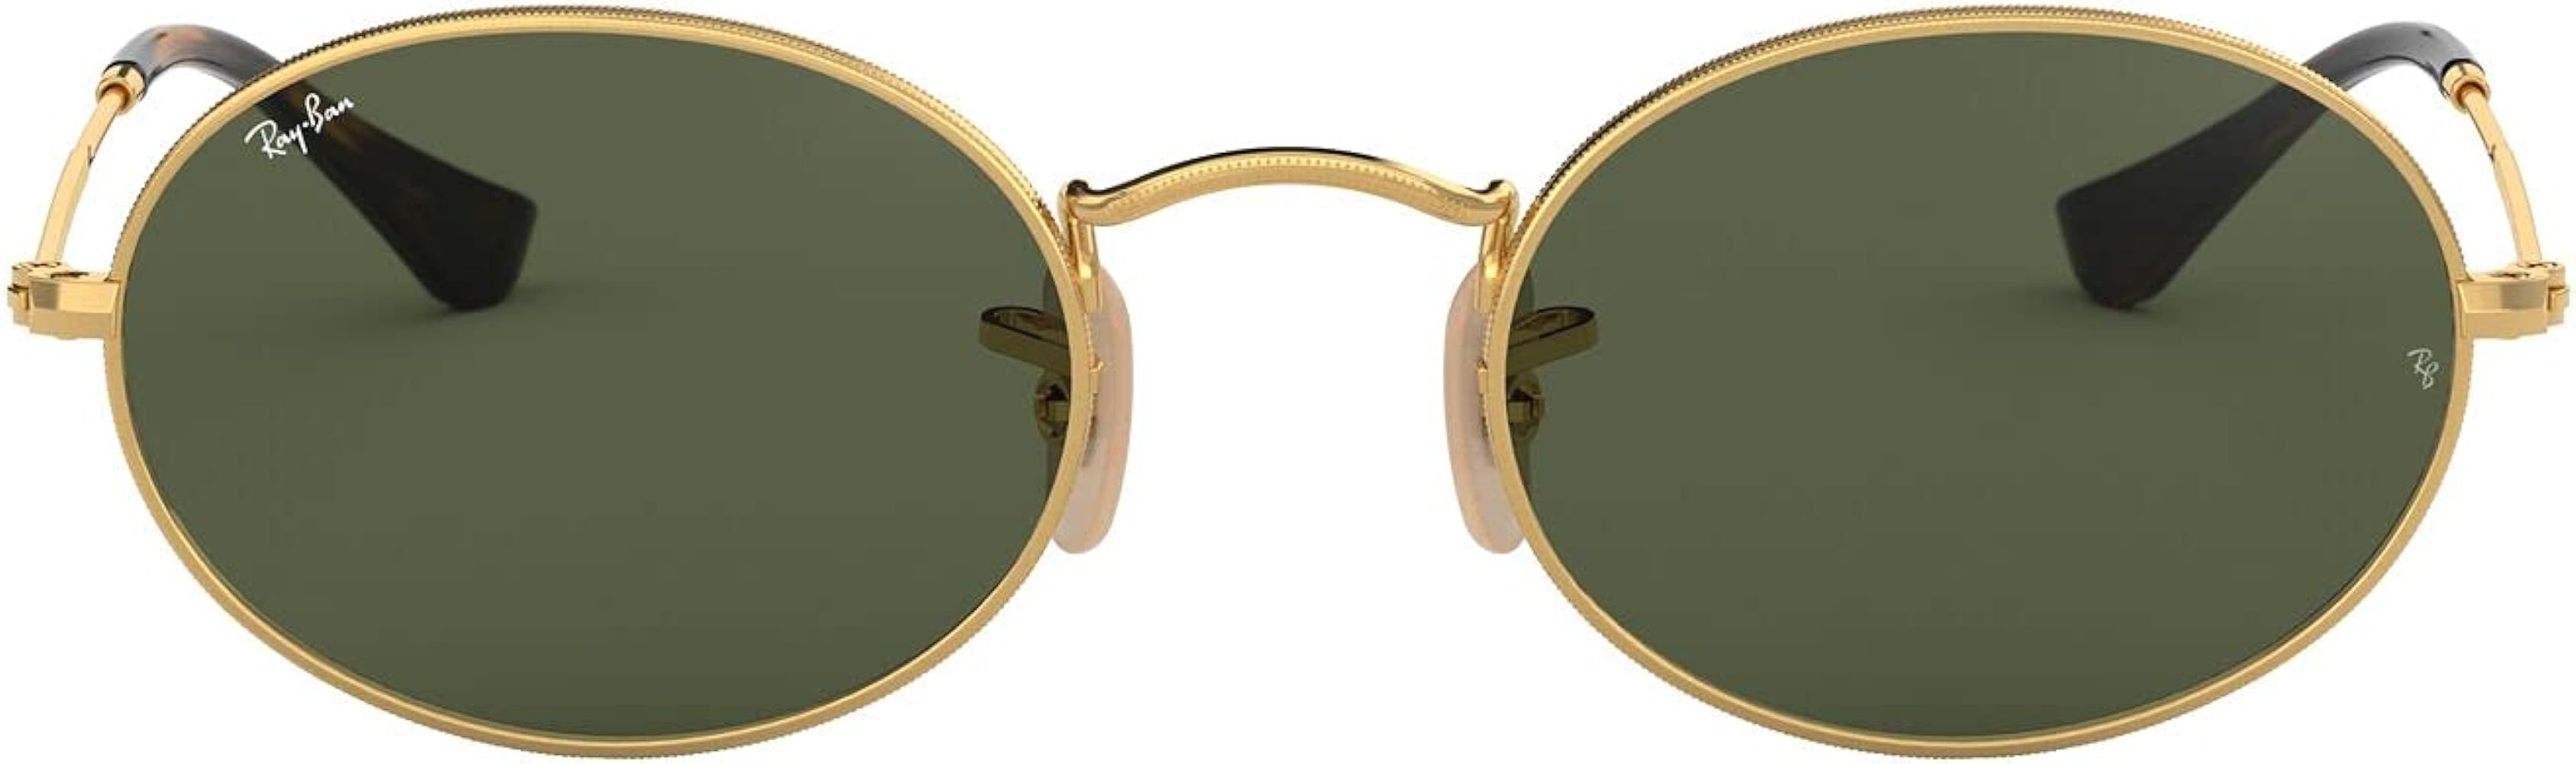 Ray-Ban unisex-adult 0RB3547N Rb3547n Oval Flat Lenses Sunglasses | Amazon (UK)